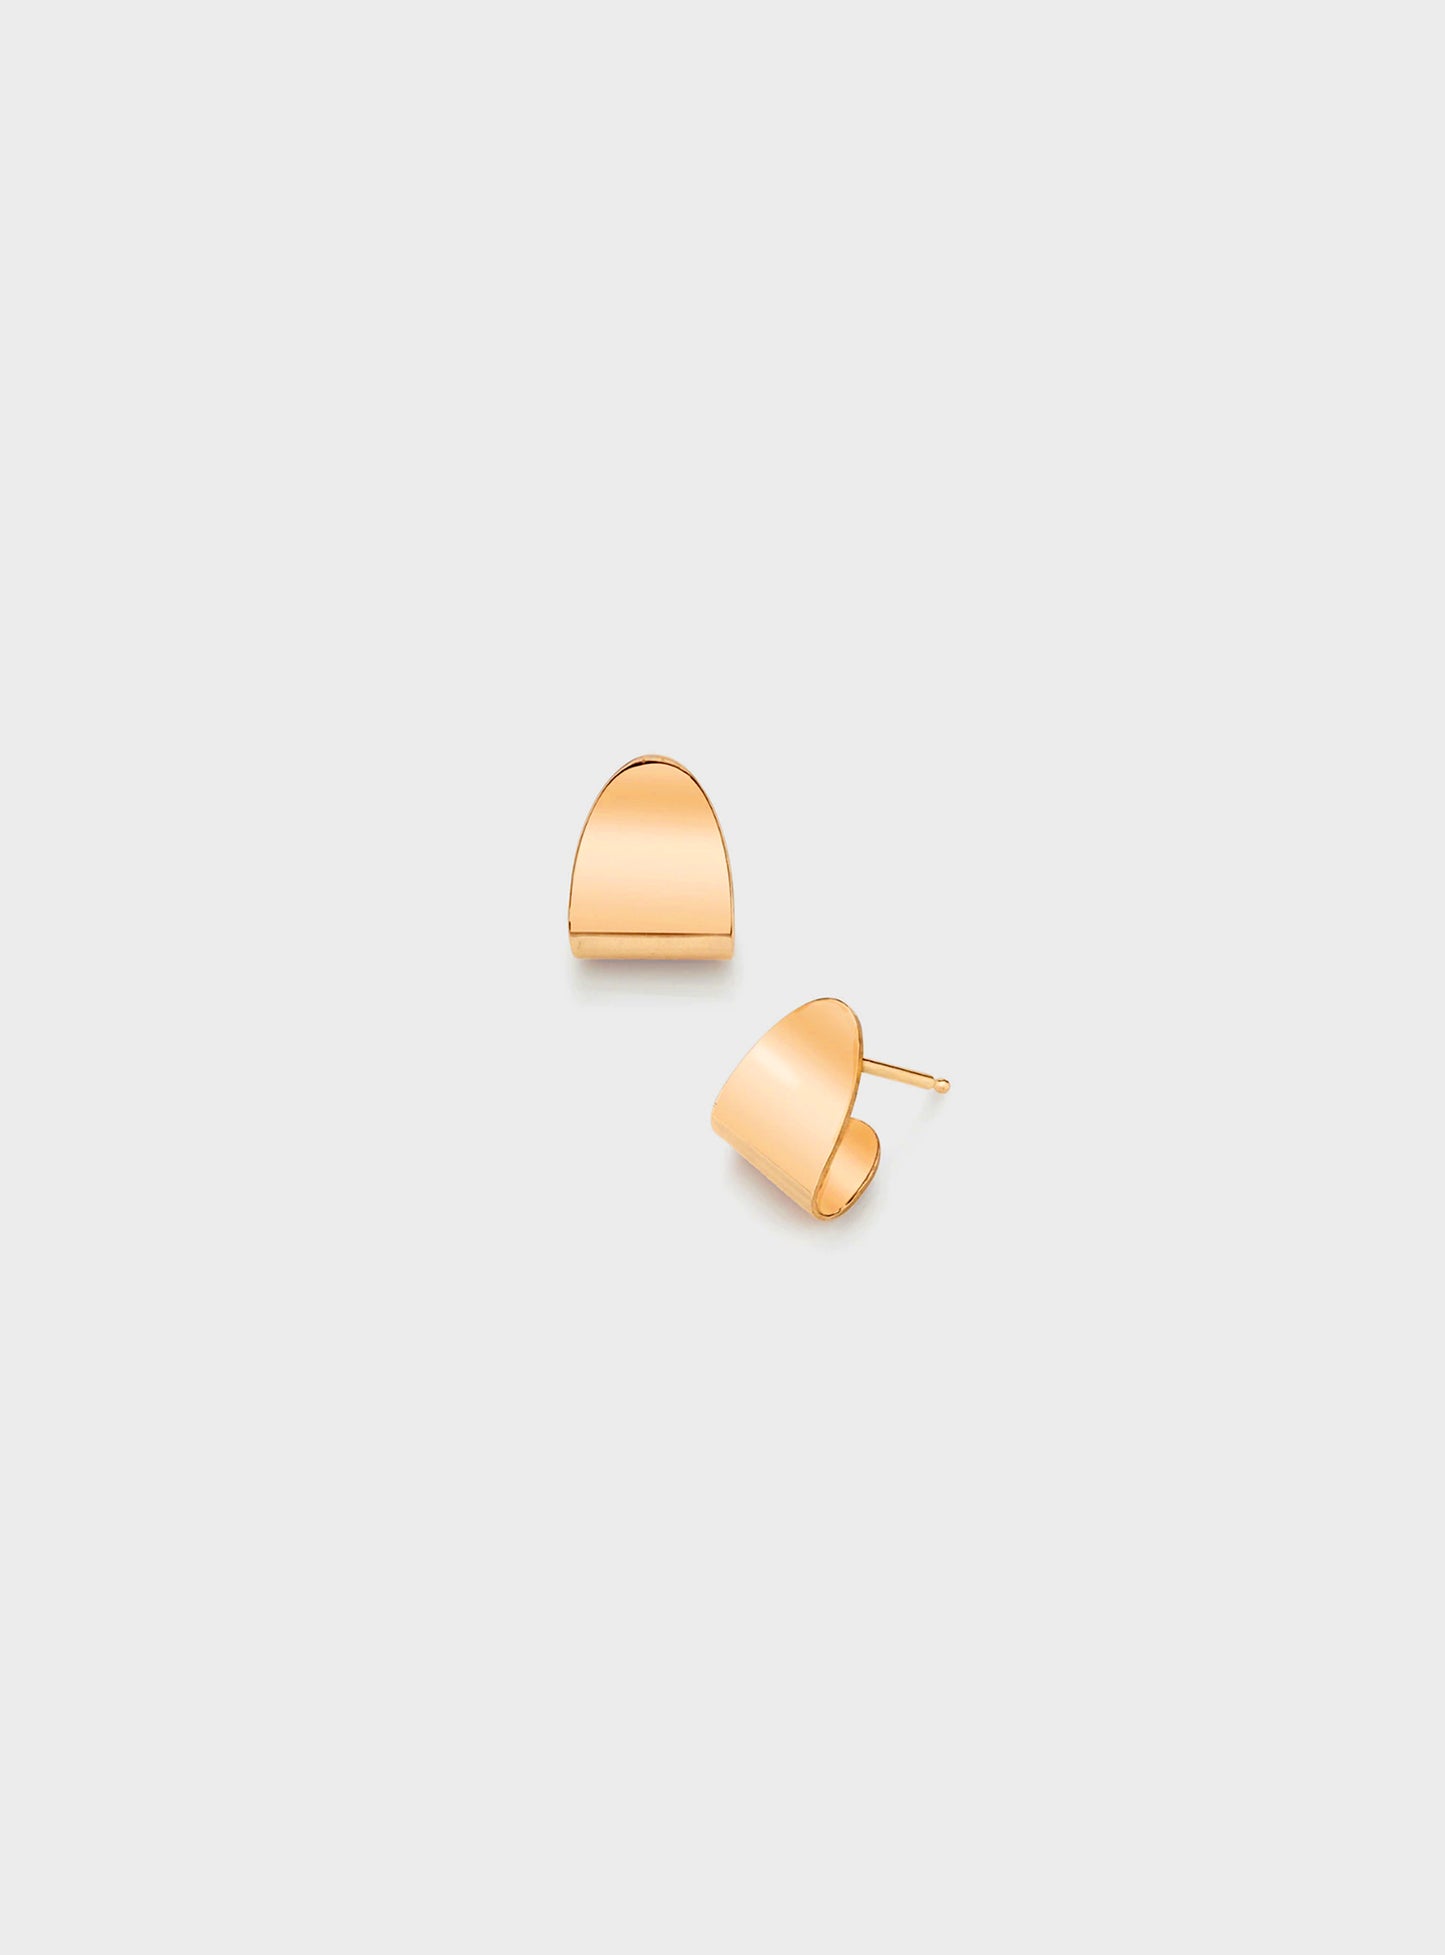 Cone Taco Stud, single earring